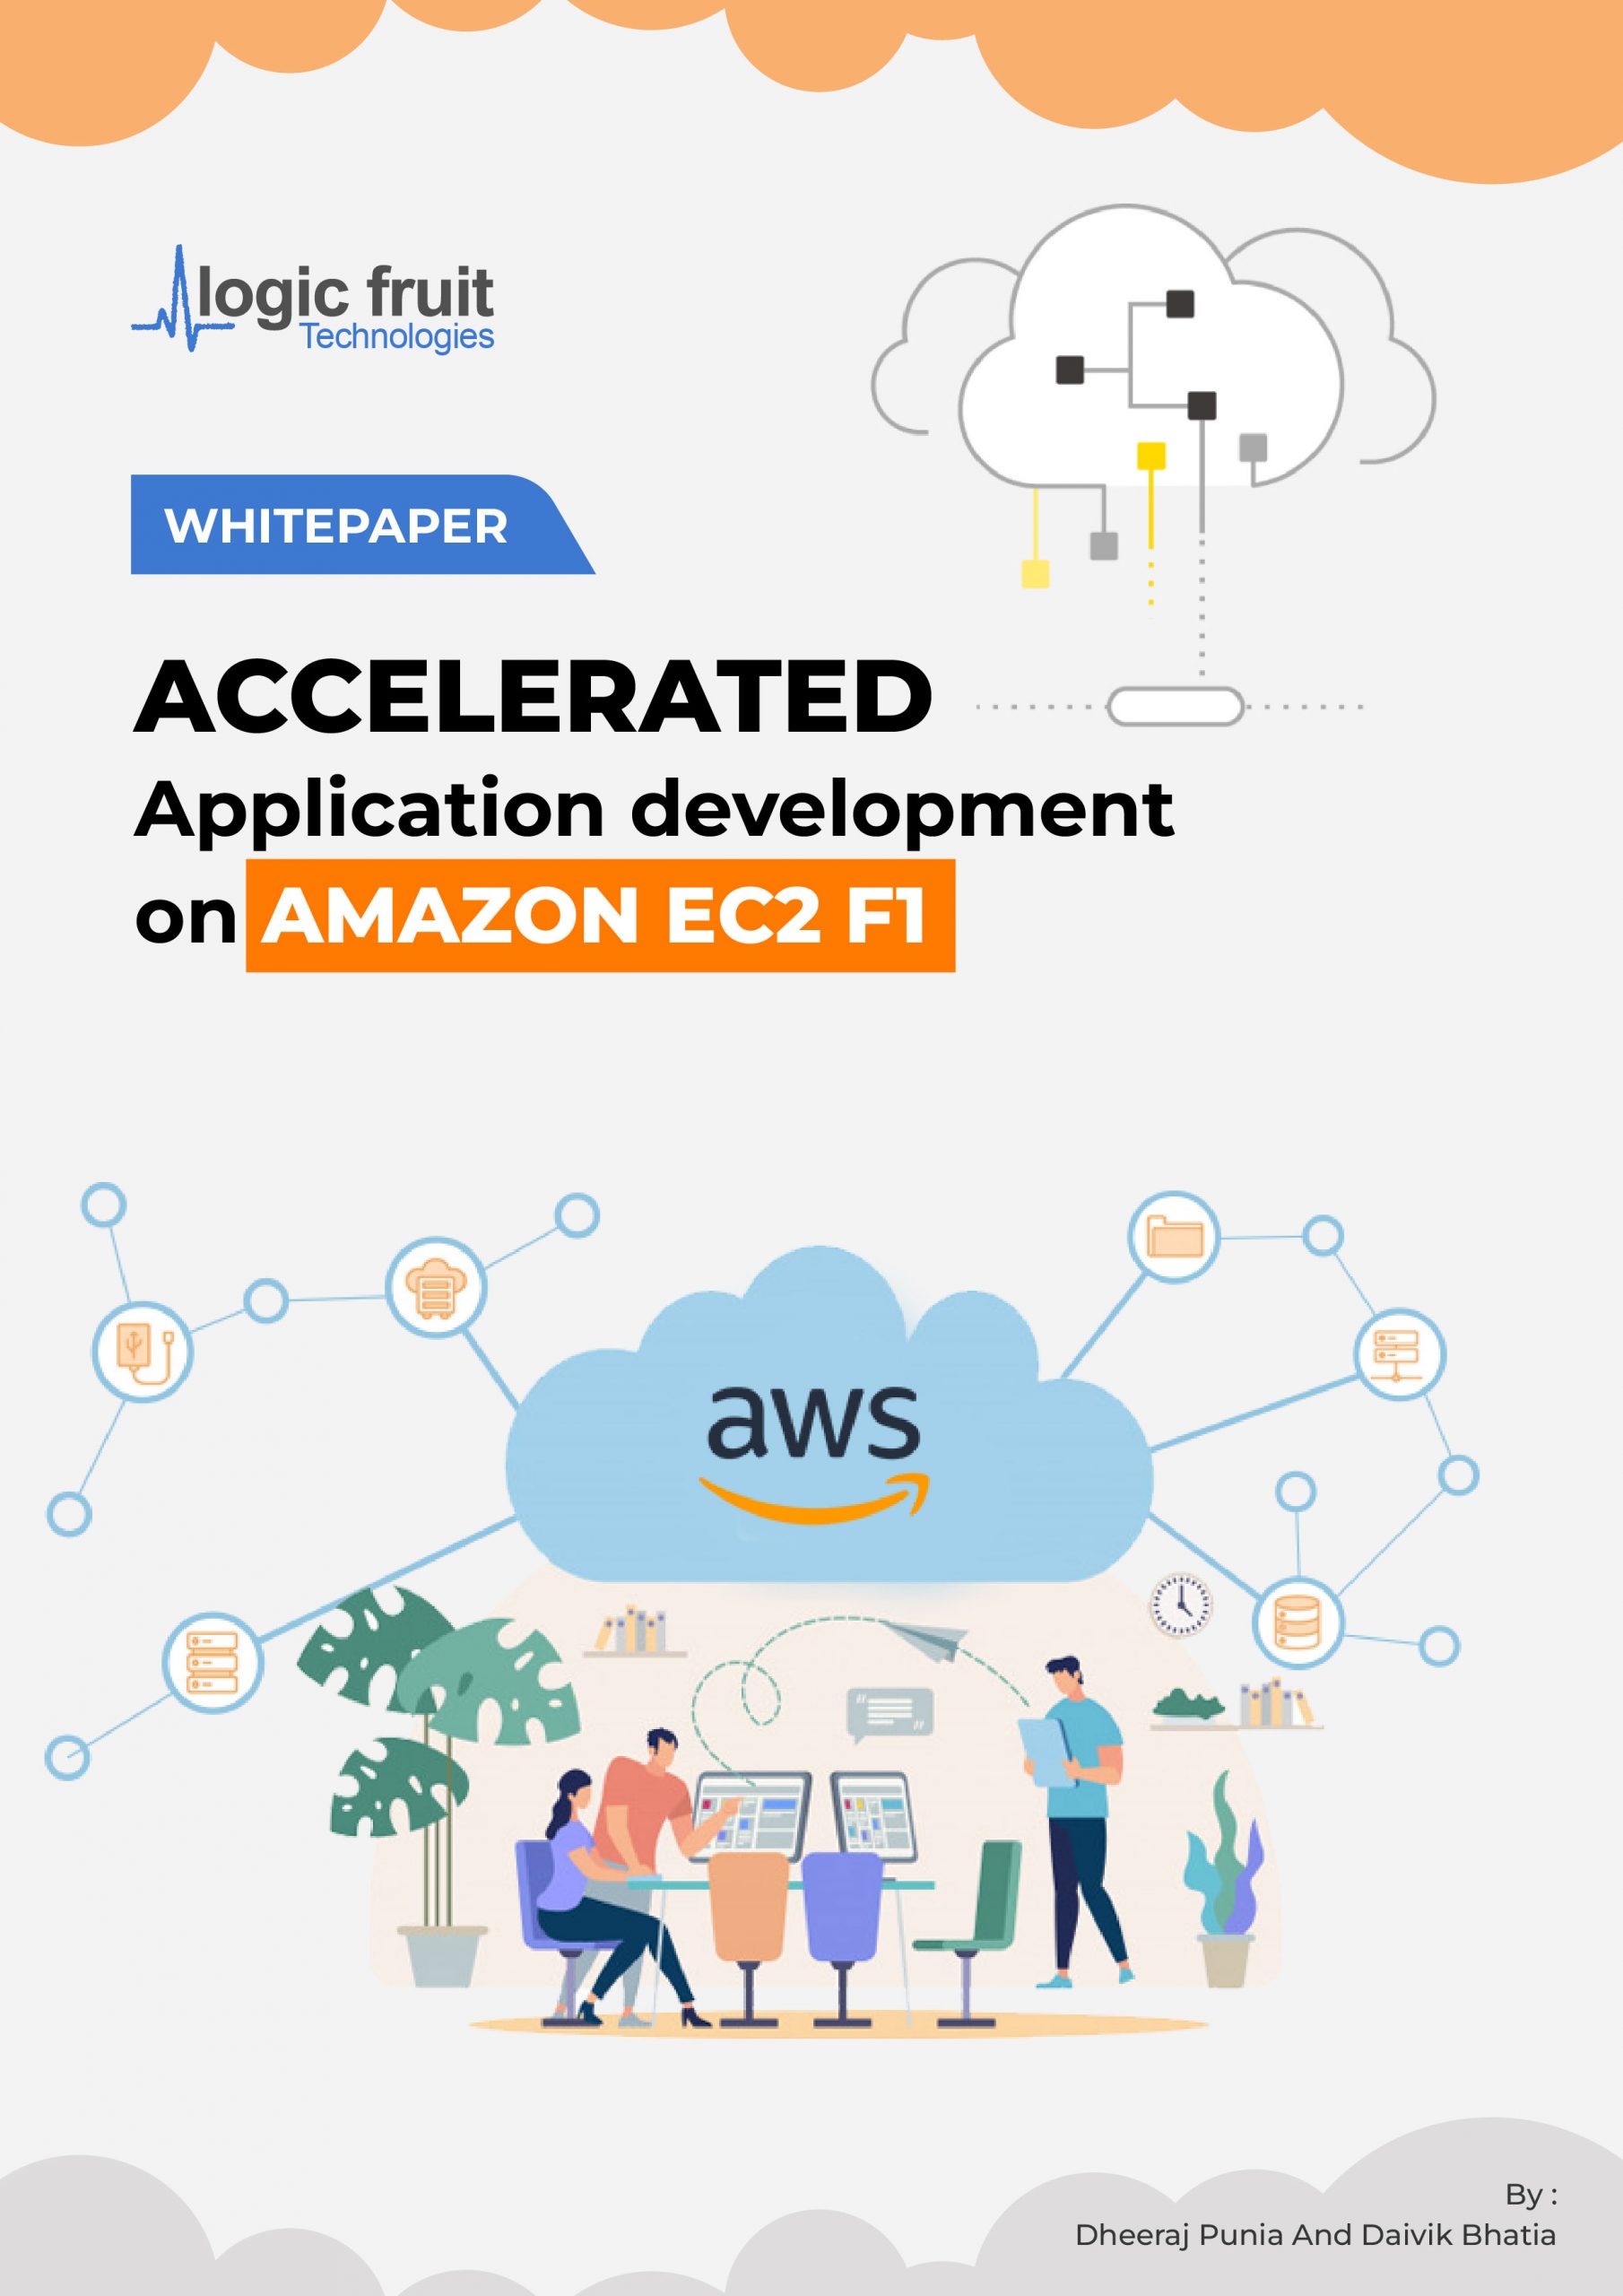 Accelerated Application Development on Amazon EC2 F1